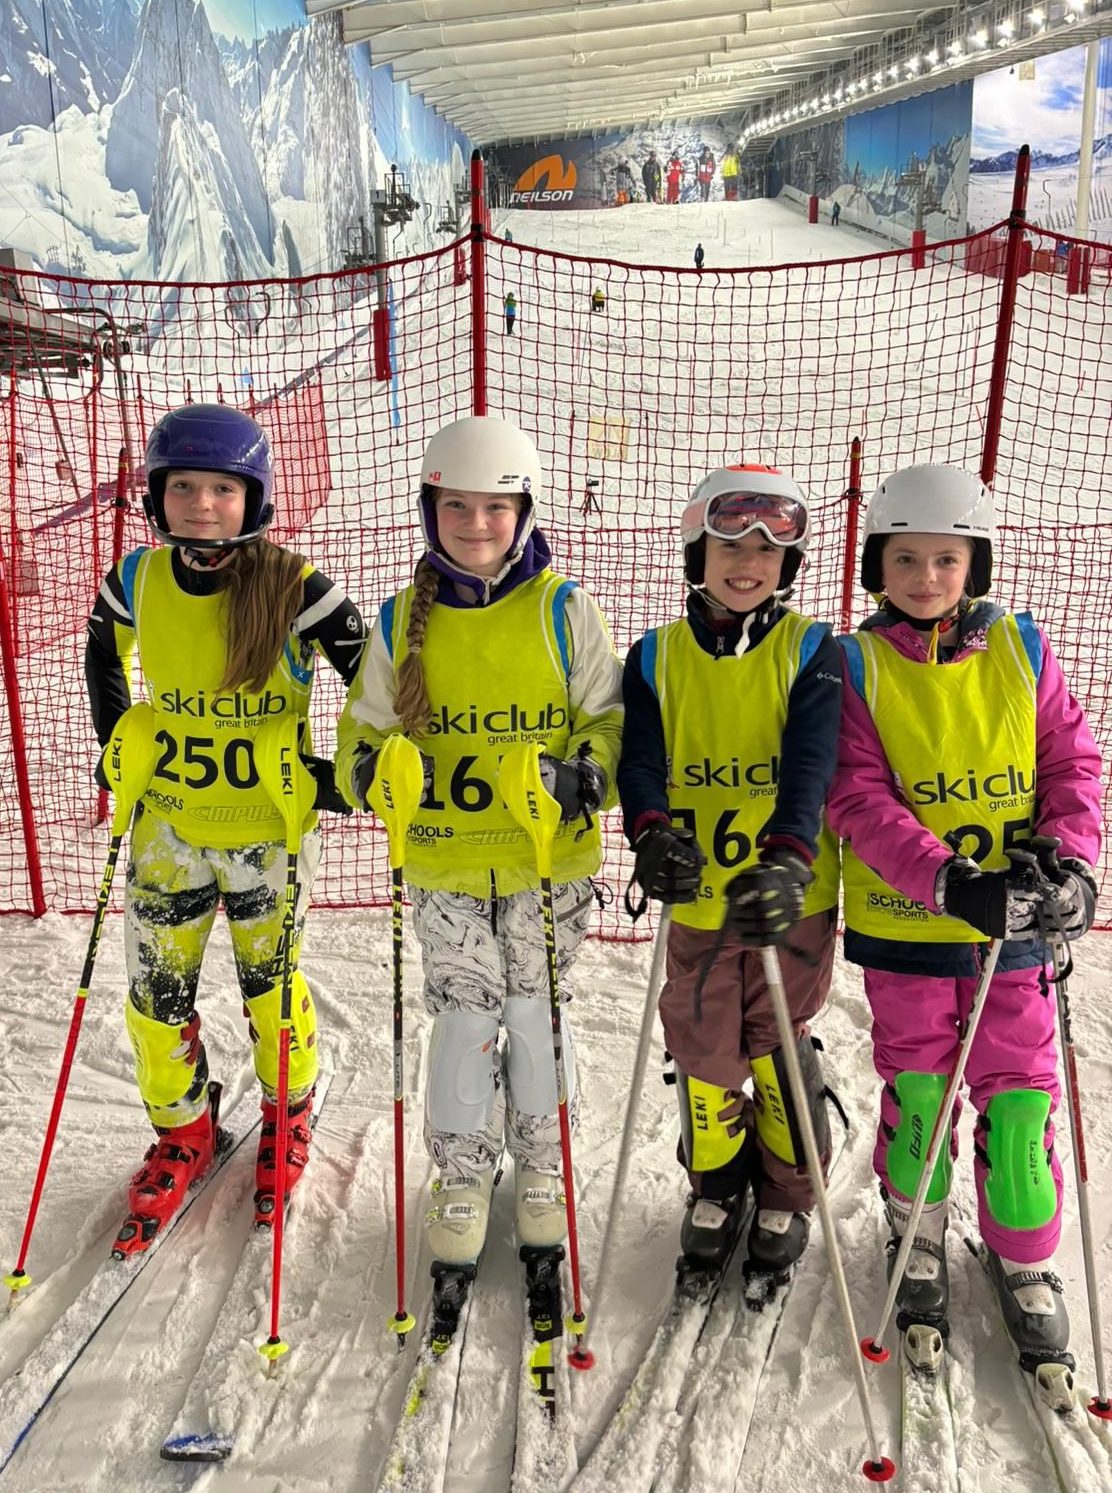 Independent Schools Ski Championships